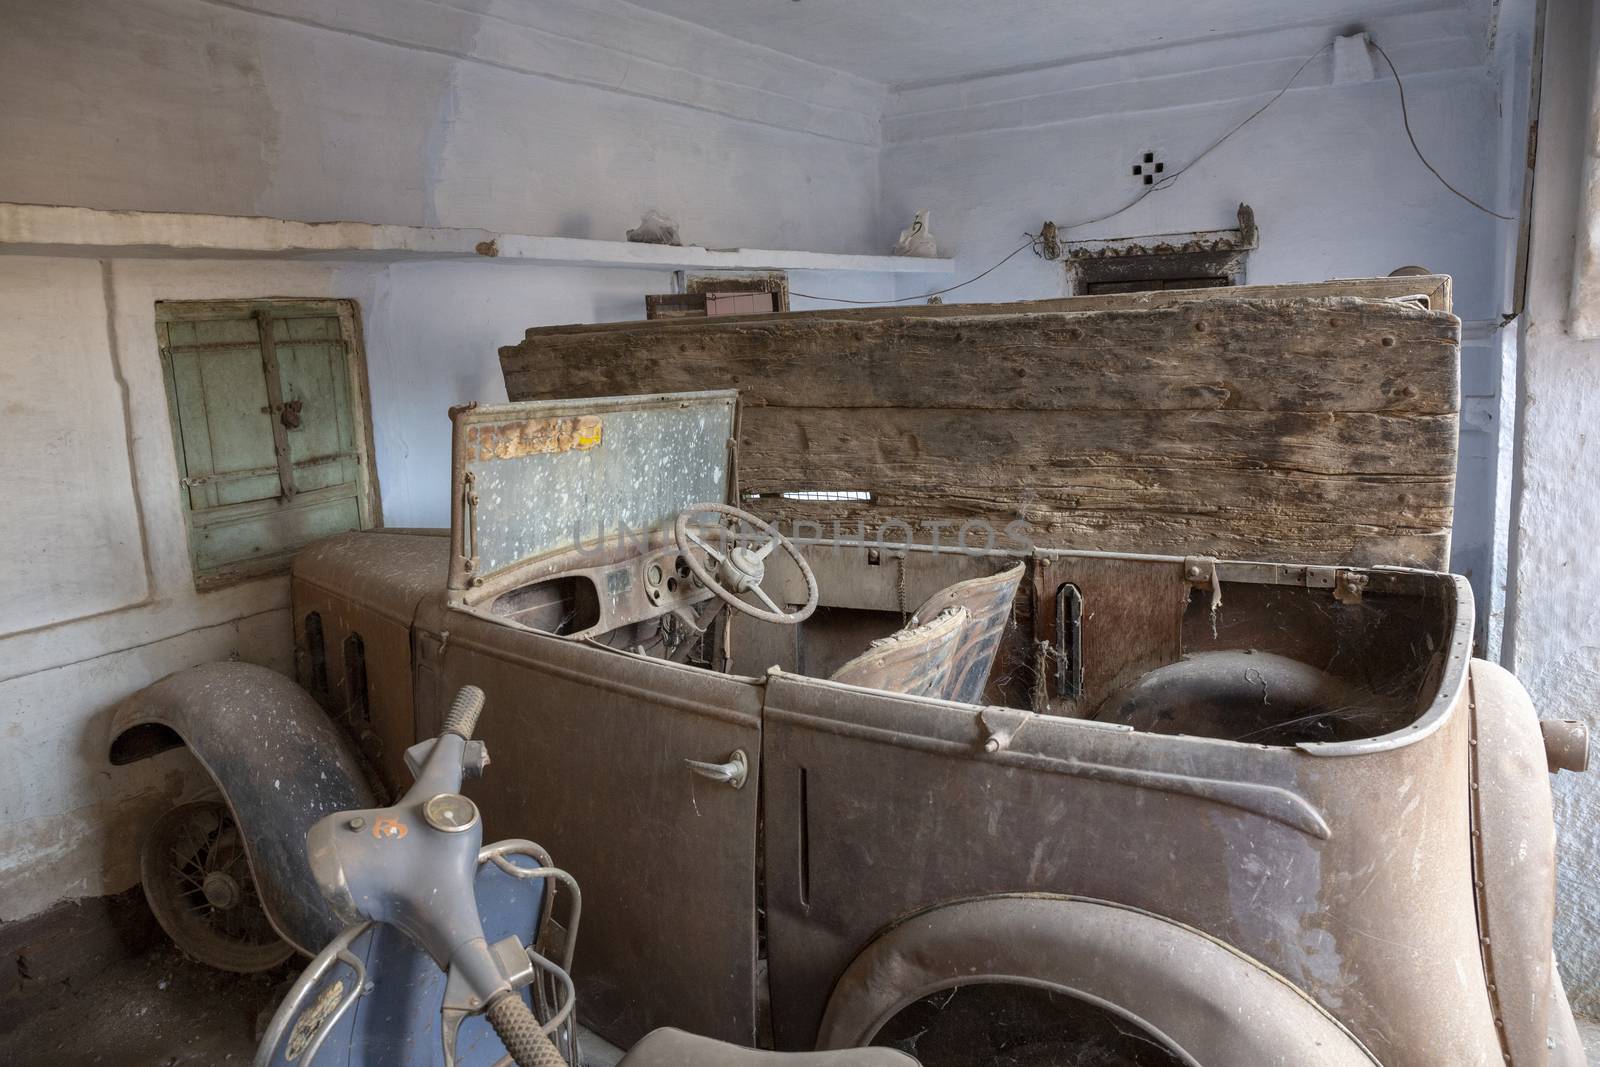 Junk Yard with an old rundown Vintage Car, india